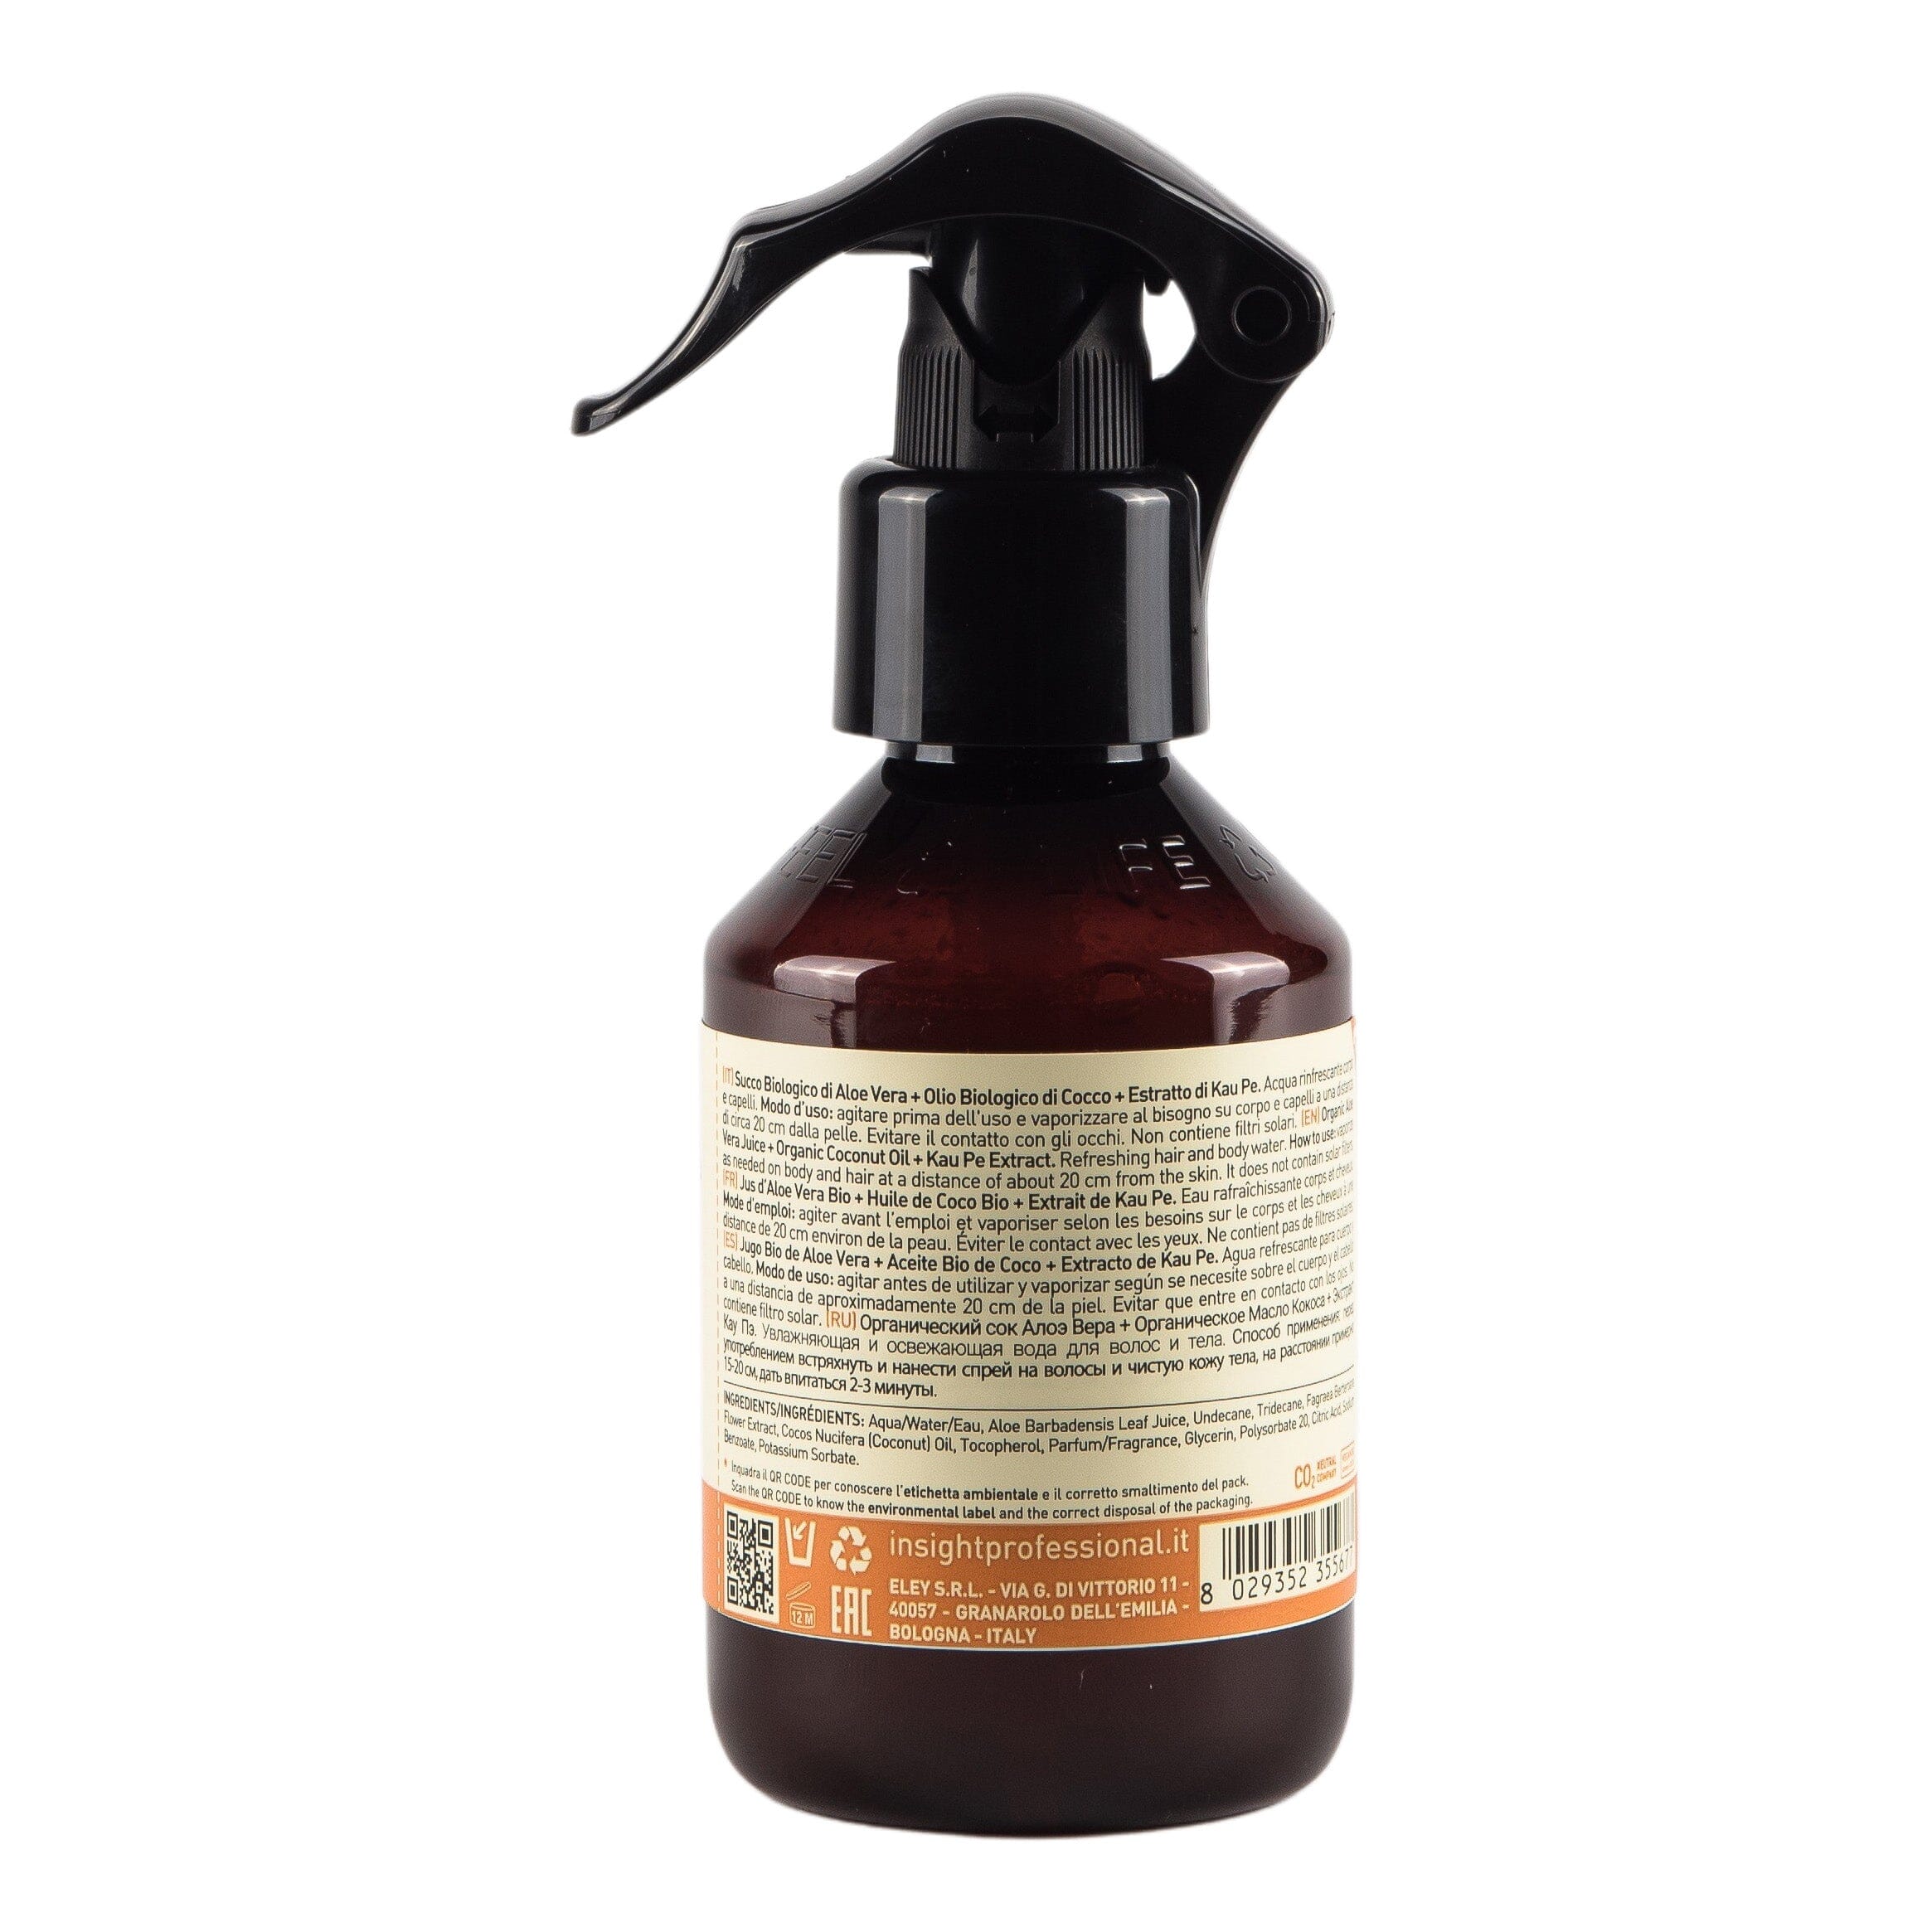 Insight Antioxidant - Hydra-refresh hair and body spray